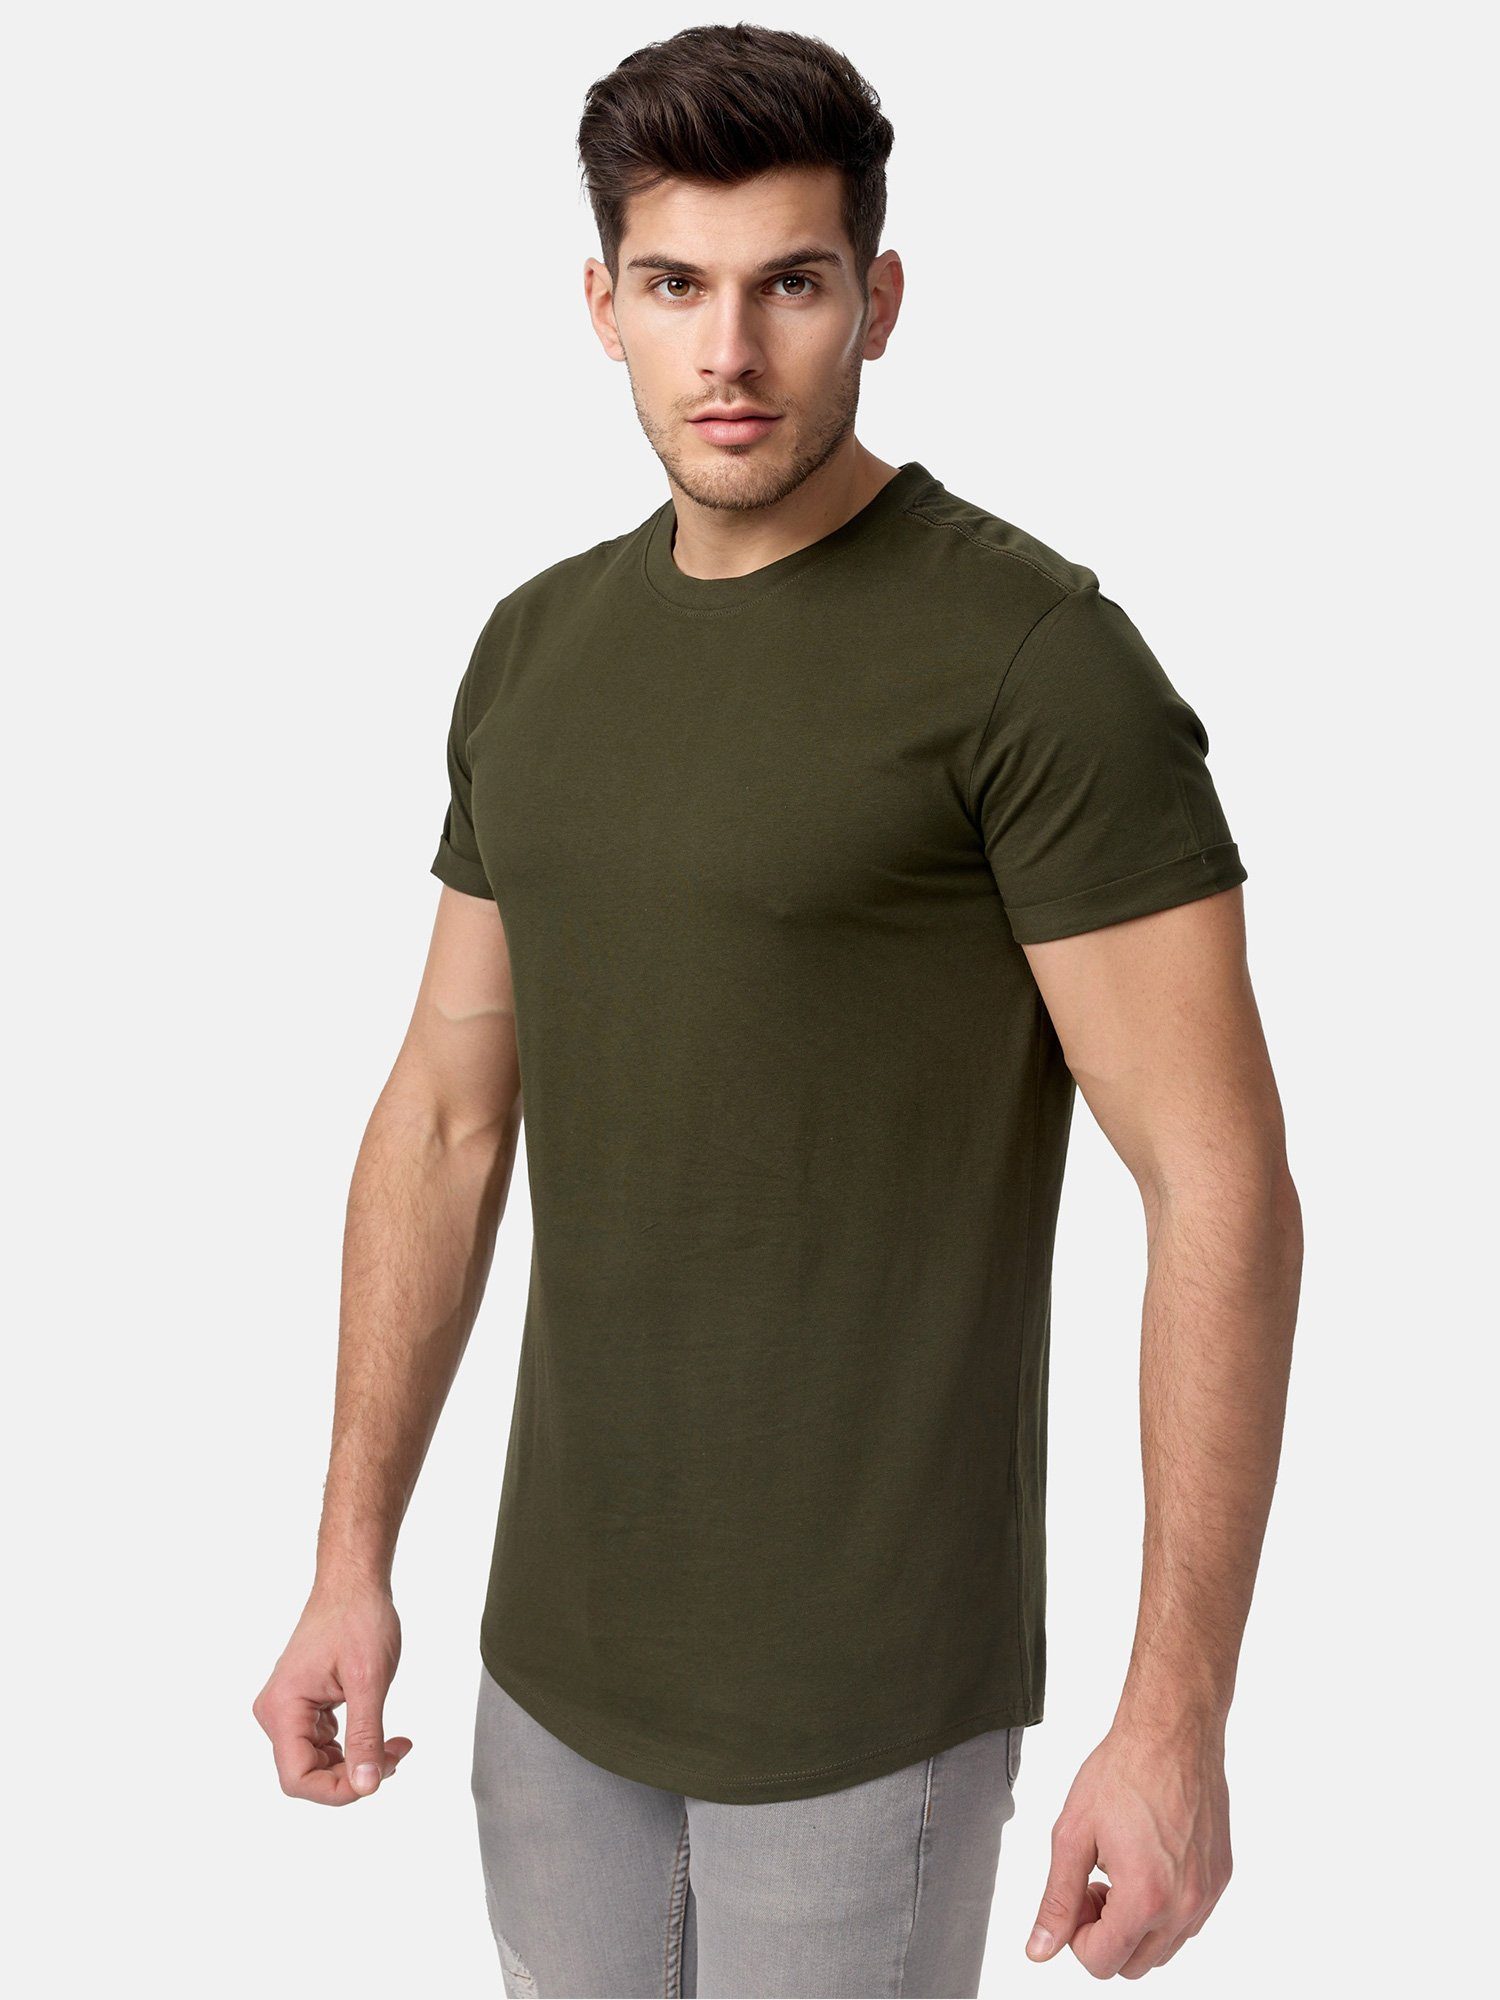 Rundhalsshirt Tazzio T-Shirt Herren E105 khaki Basic